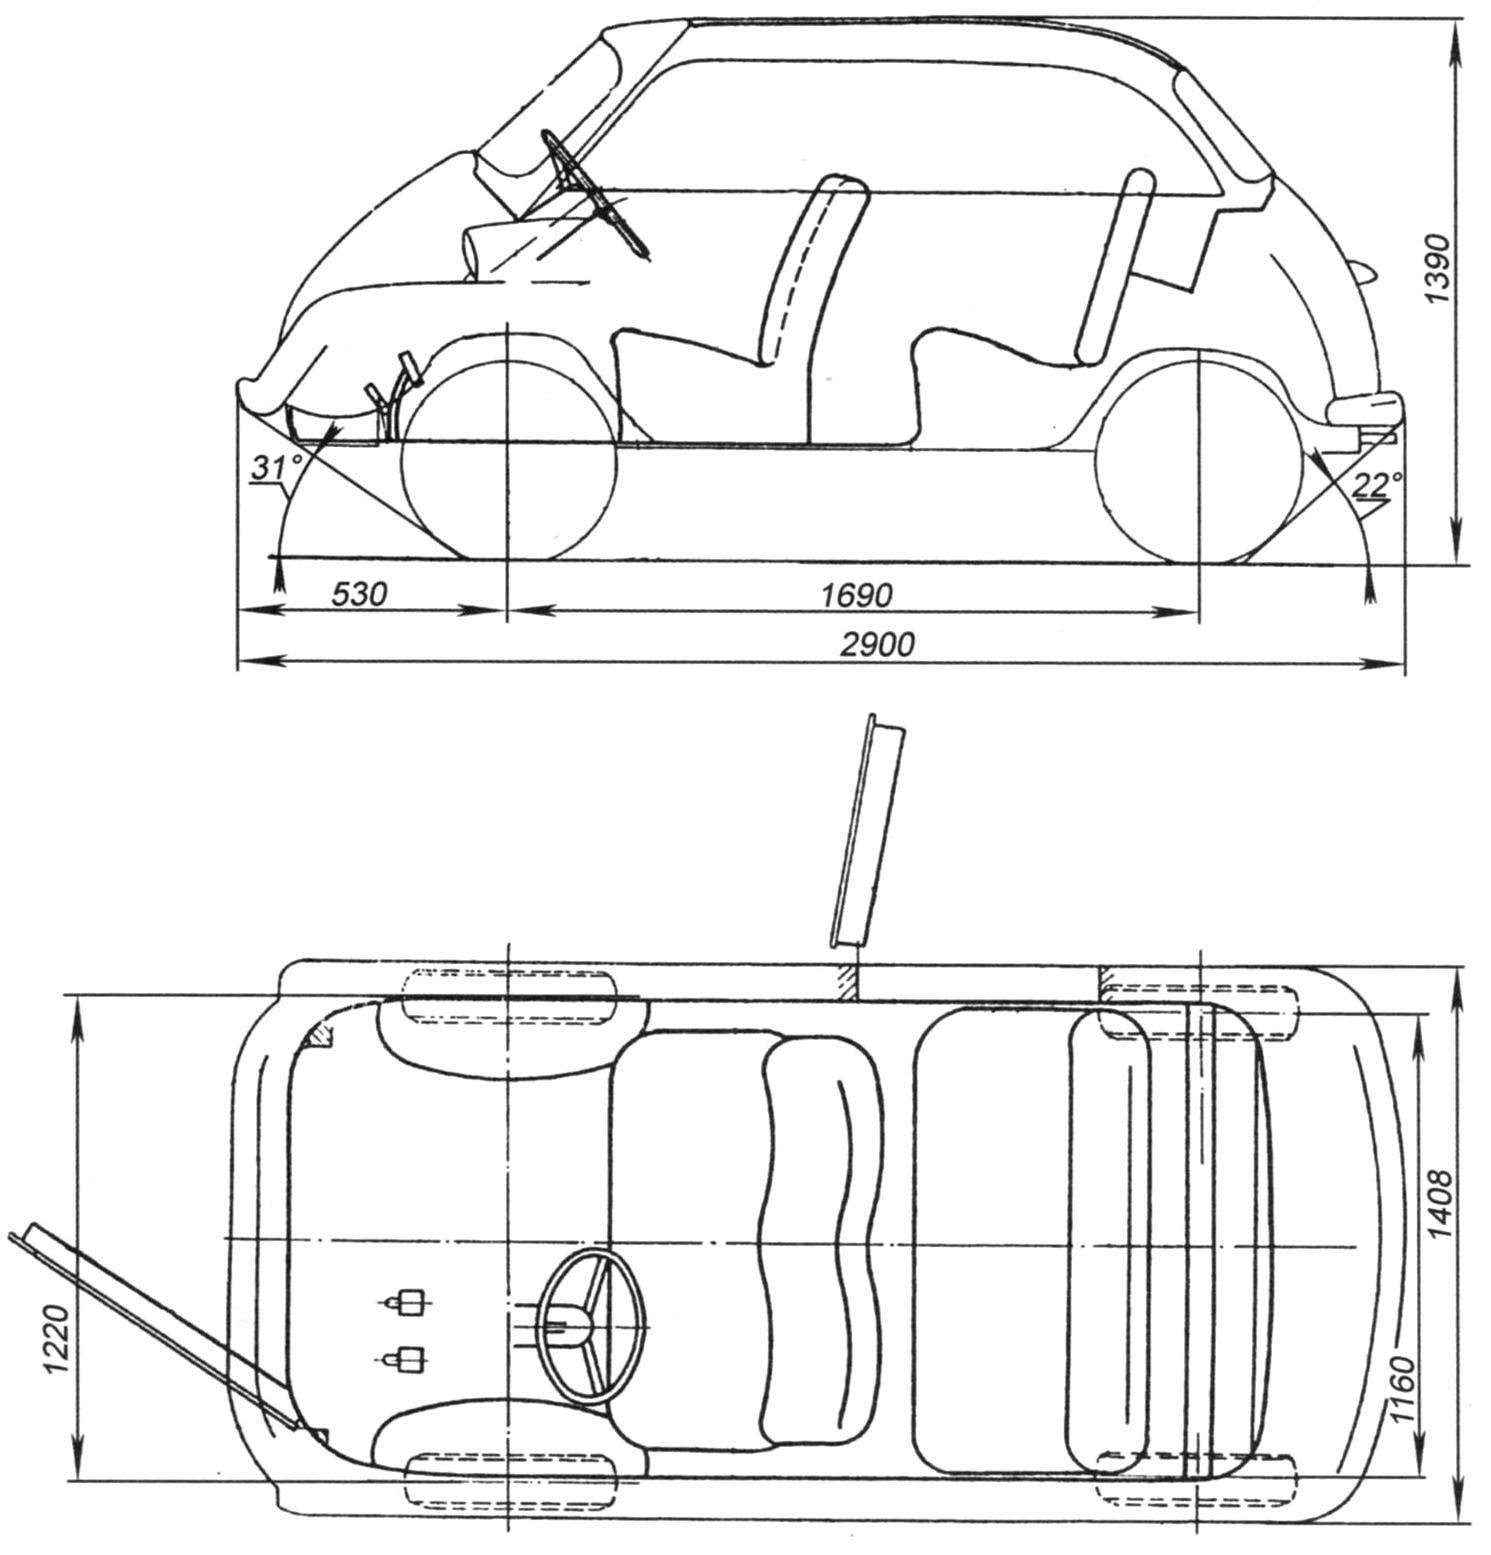 The development of Italian double sidecar 